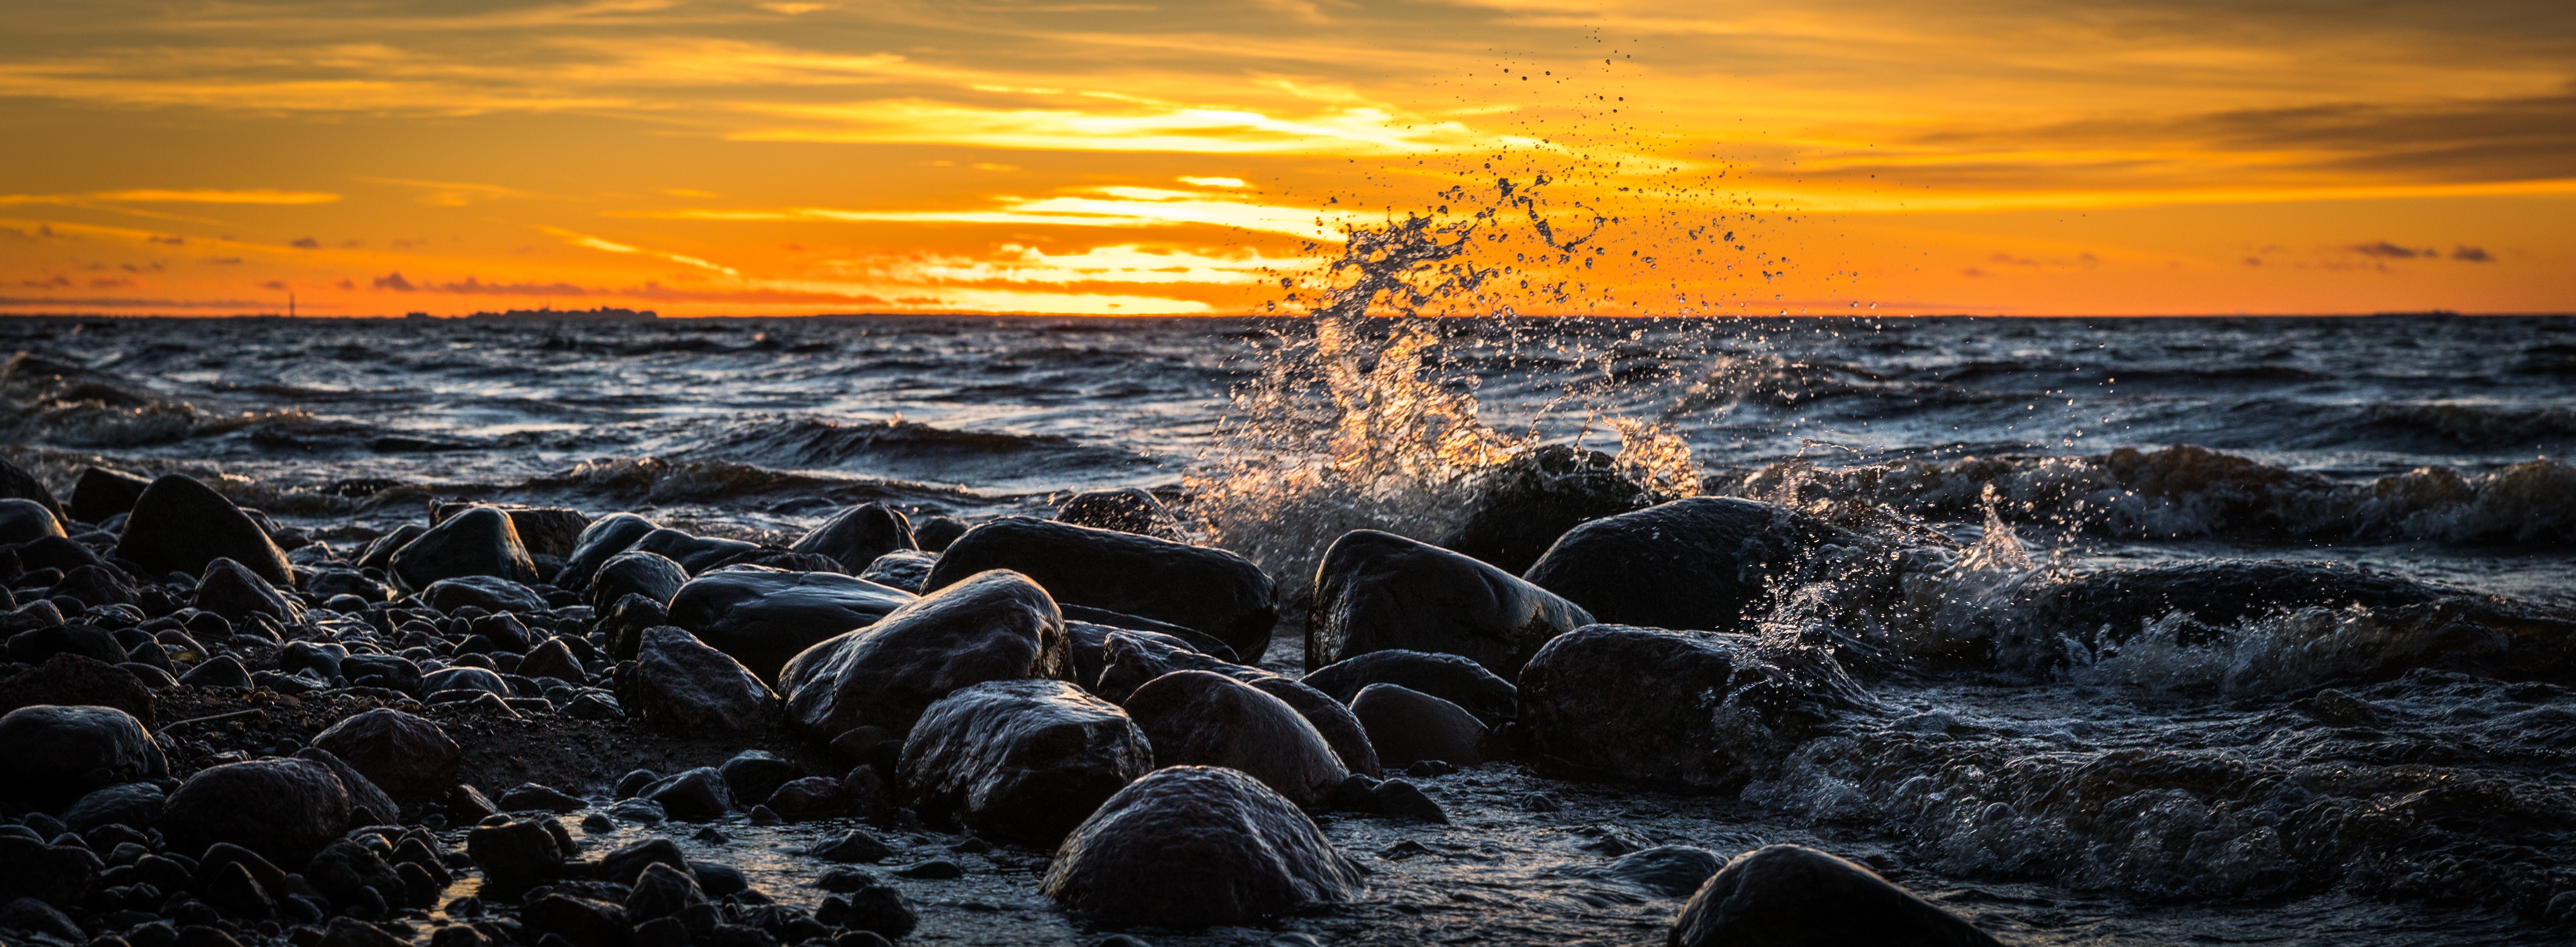 Waves splashing at stones on beach during sunset photo